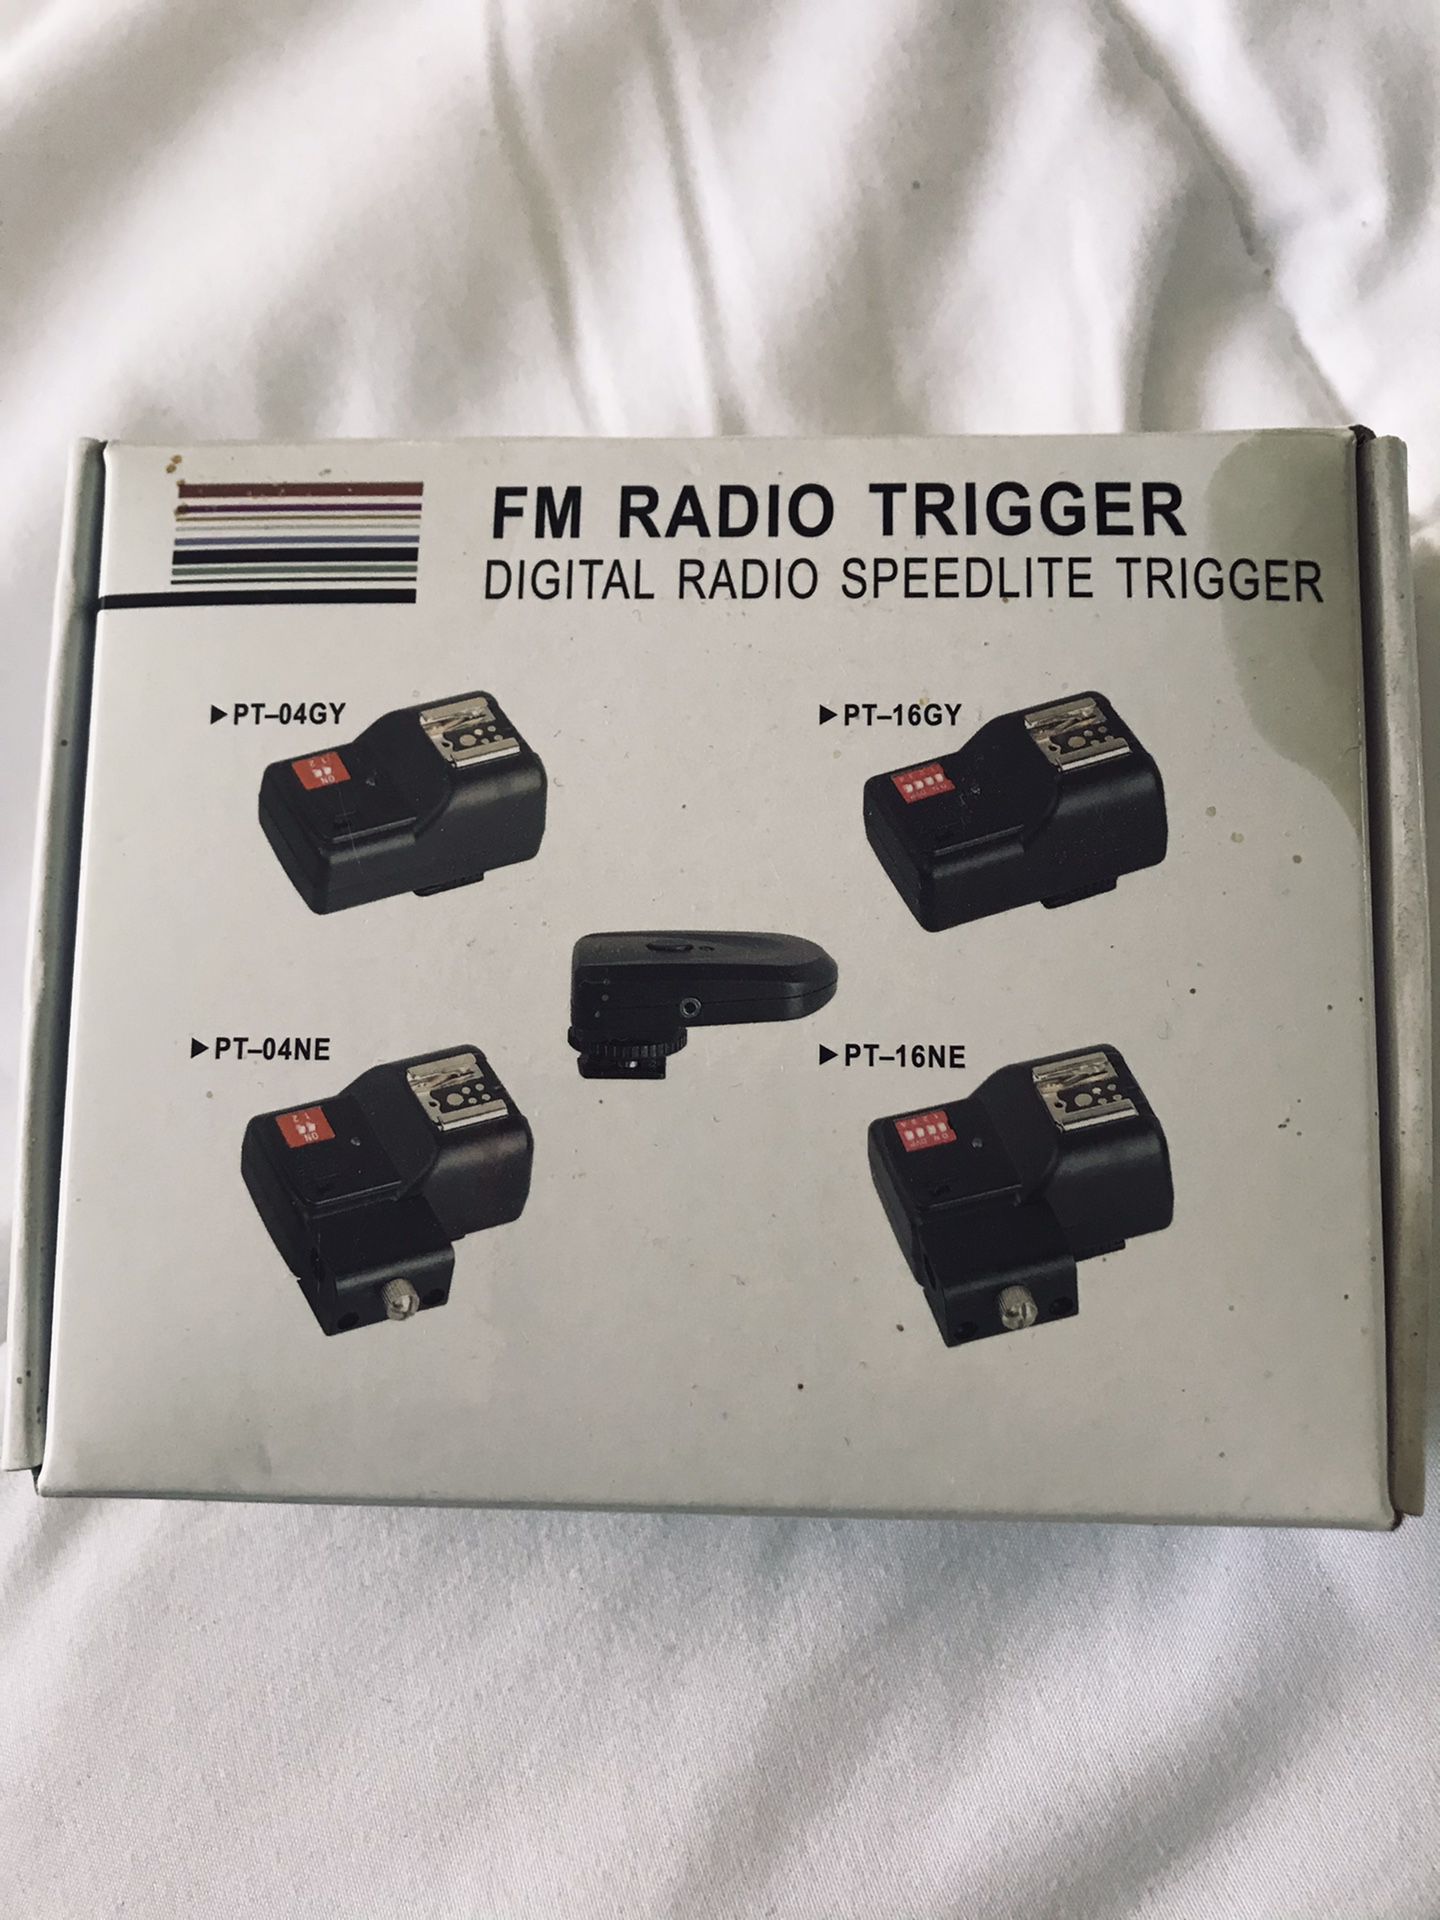 Neewer FM Radio Trigger Digital Speedlite Trigger PT-16GY for cameras